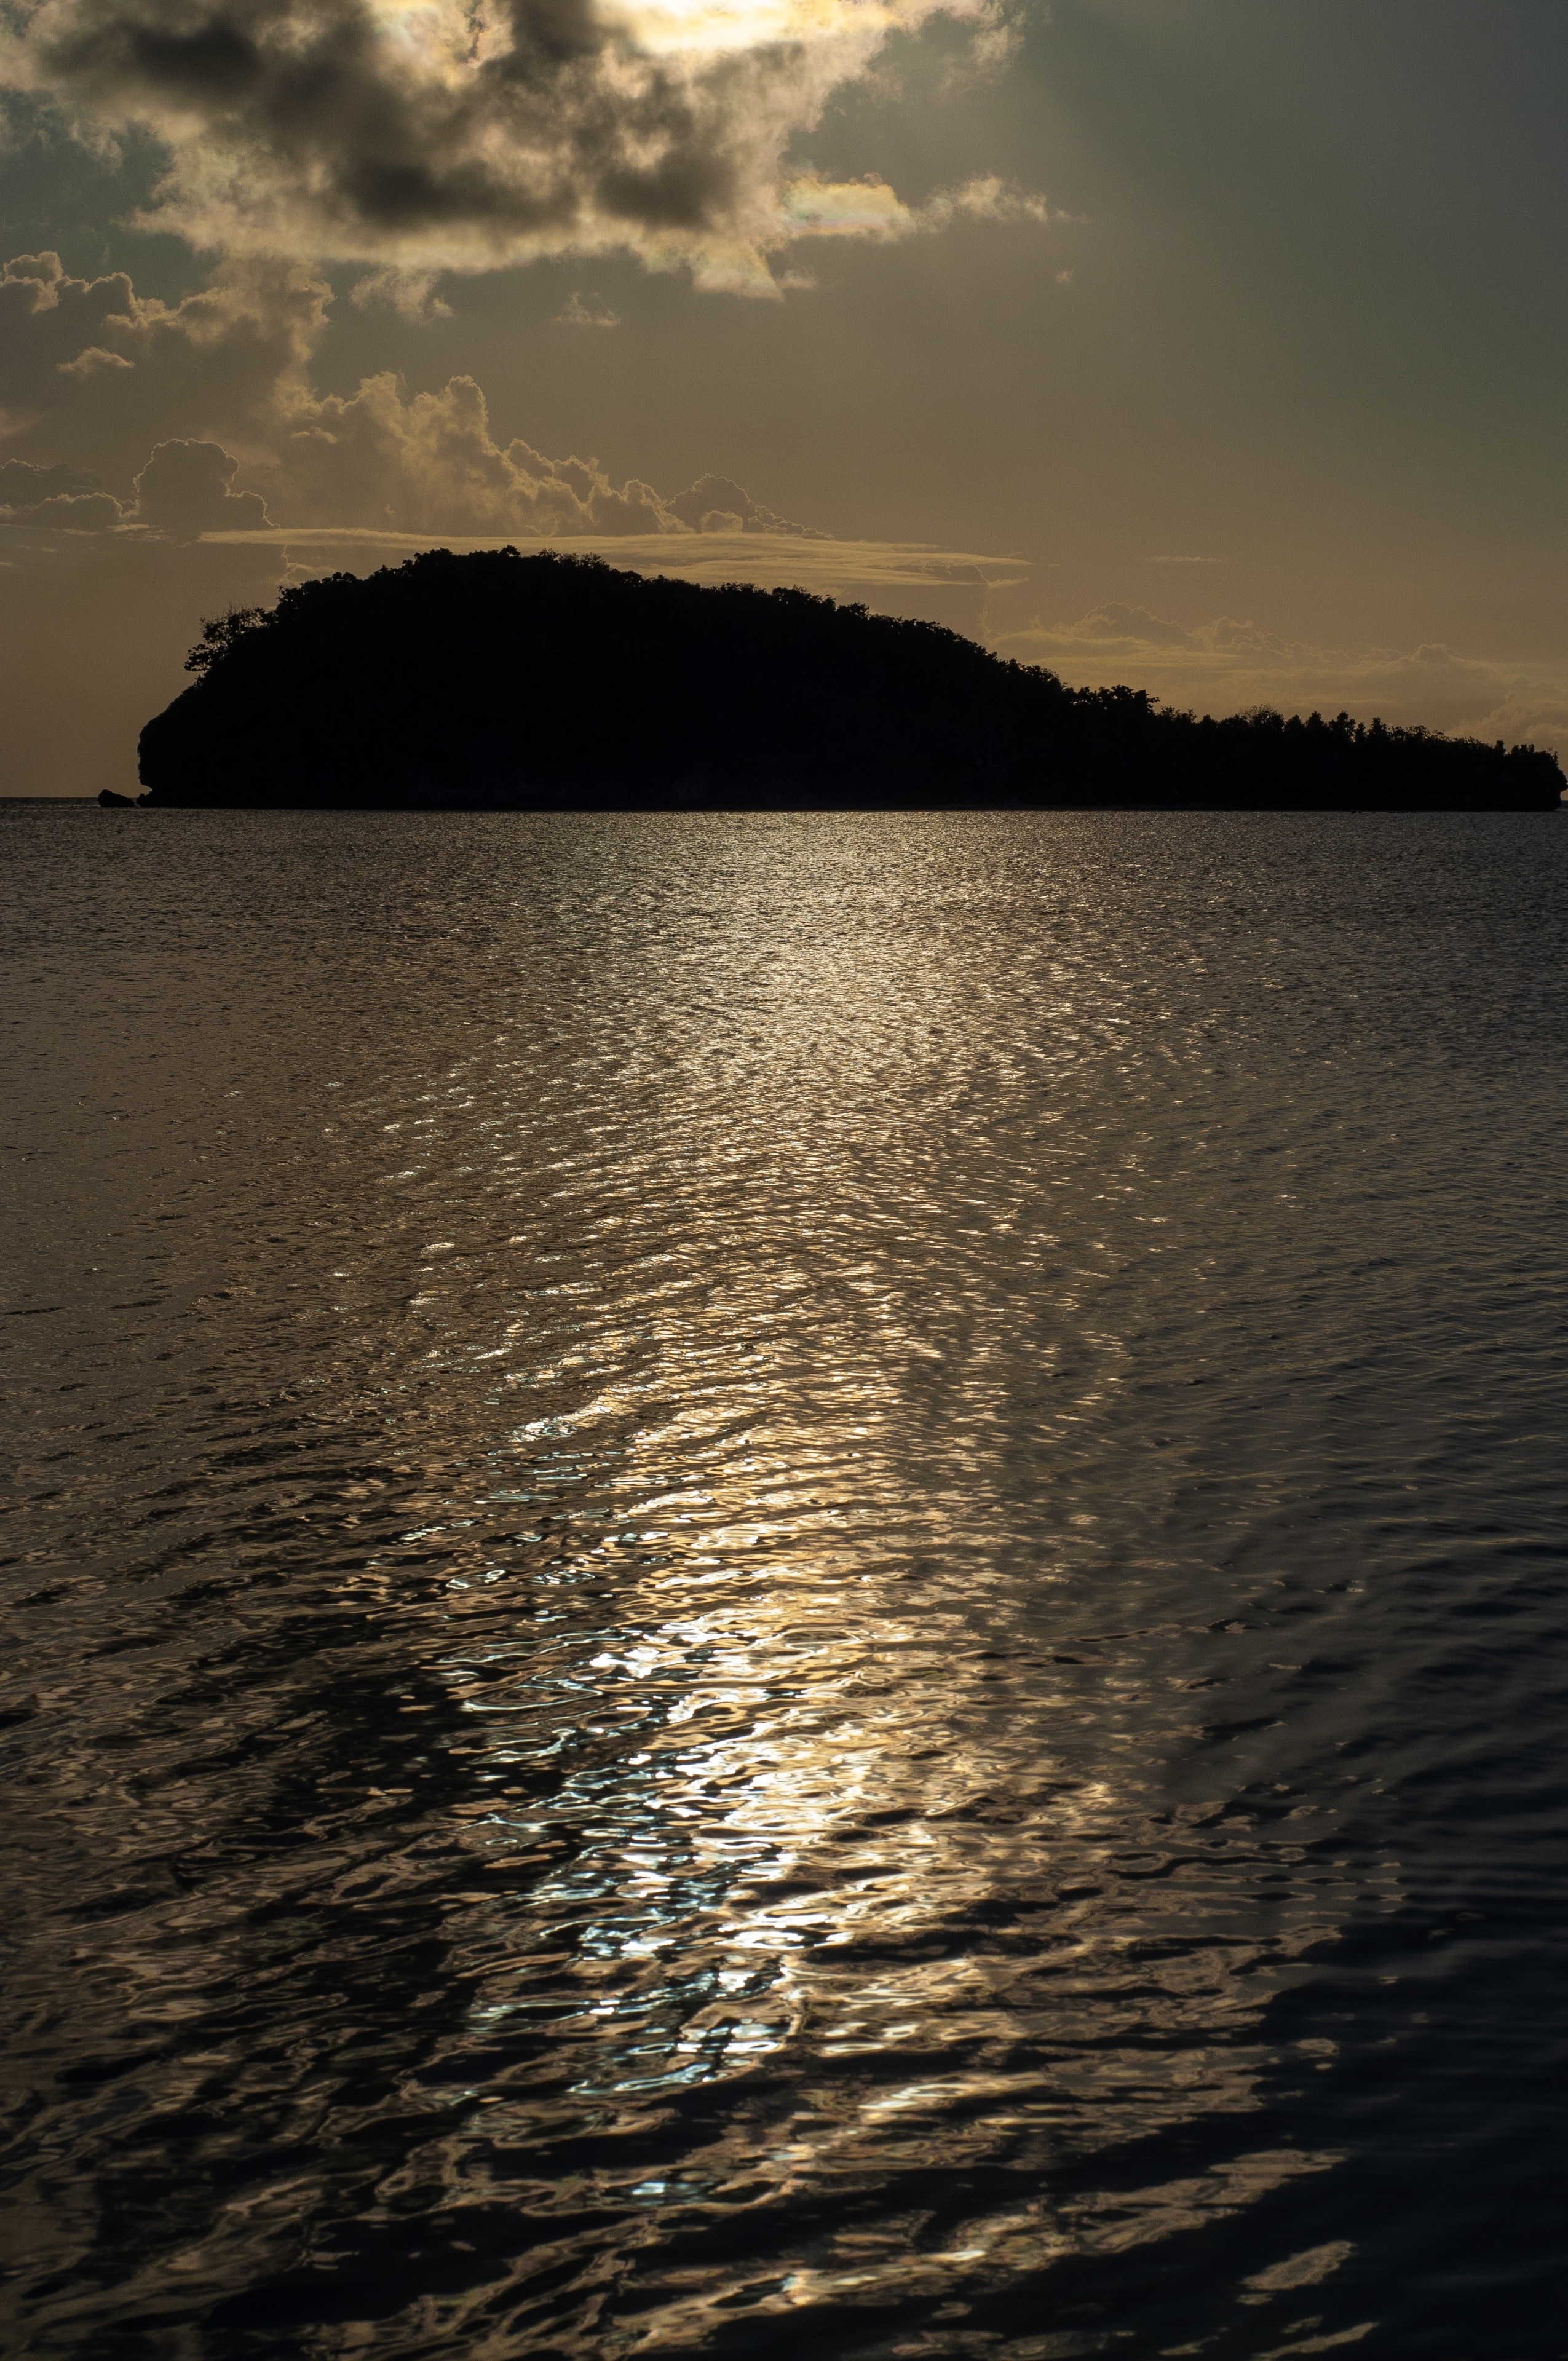 Sunset and Alupat Island on Hagatna Bay 
#adventure